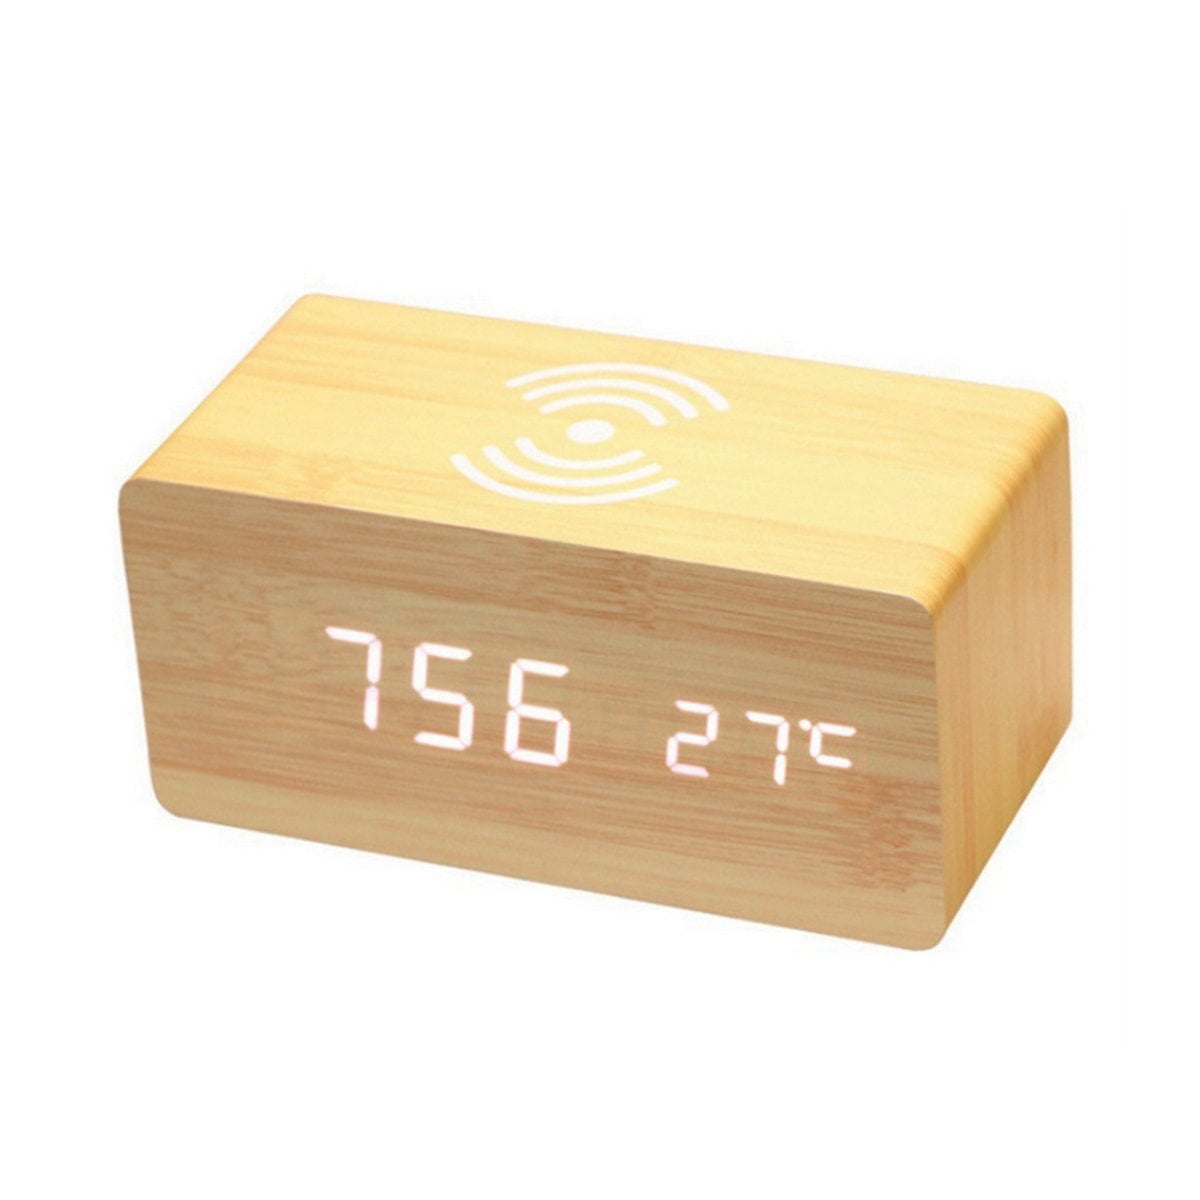 Moderne Cube en Bois Wood Digital DEL Desk contrôle vocal alarme horloge thermomètre 